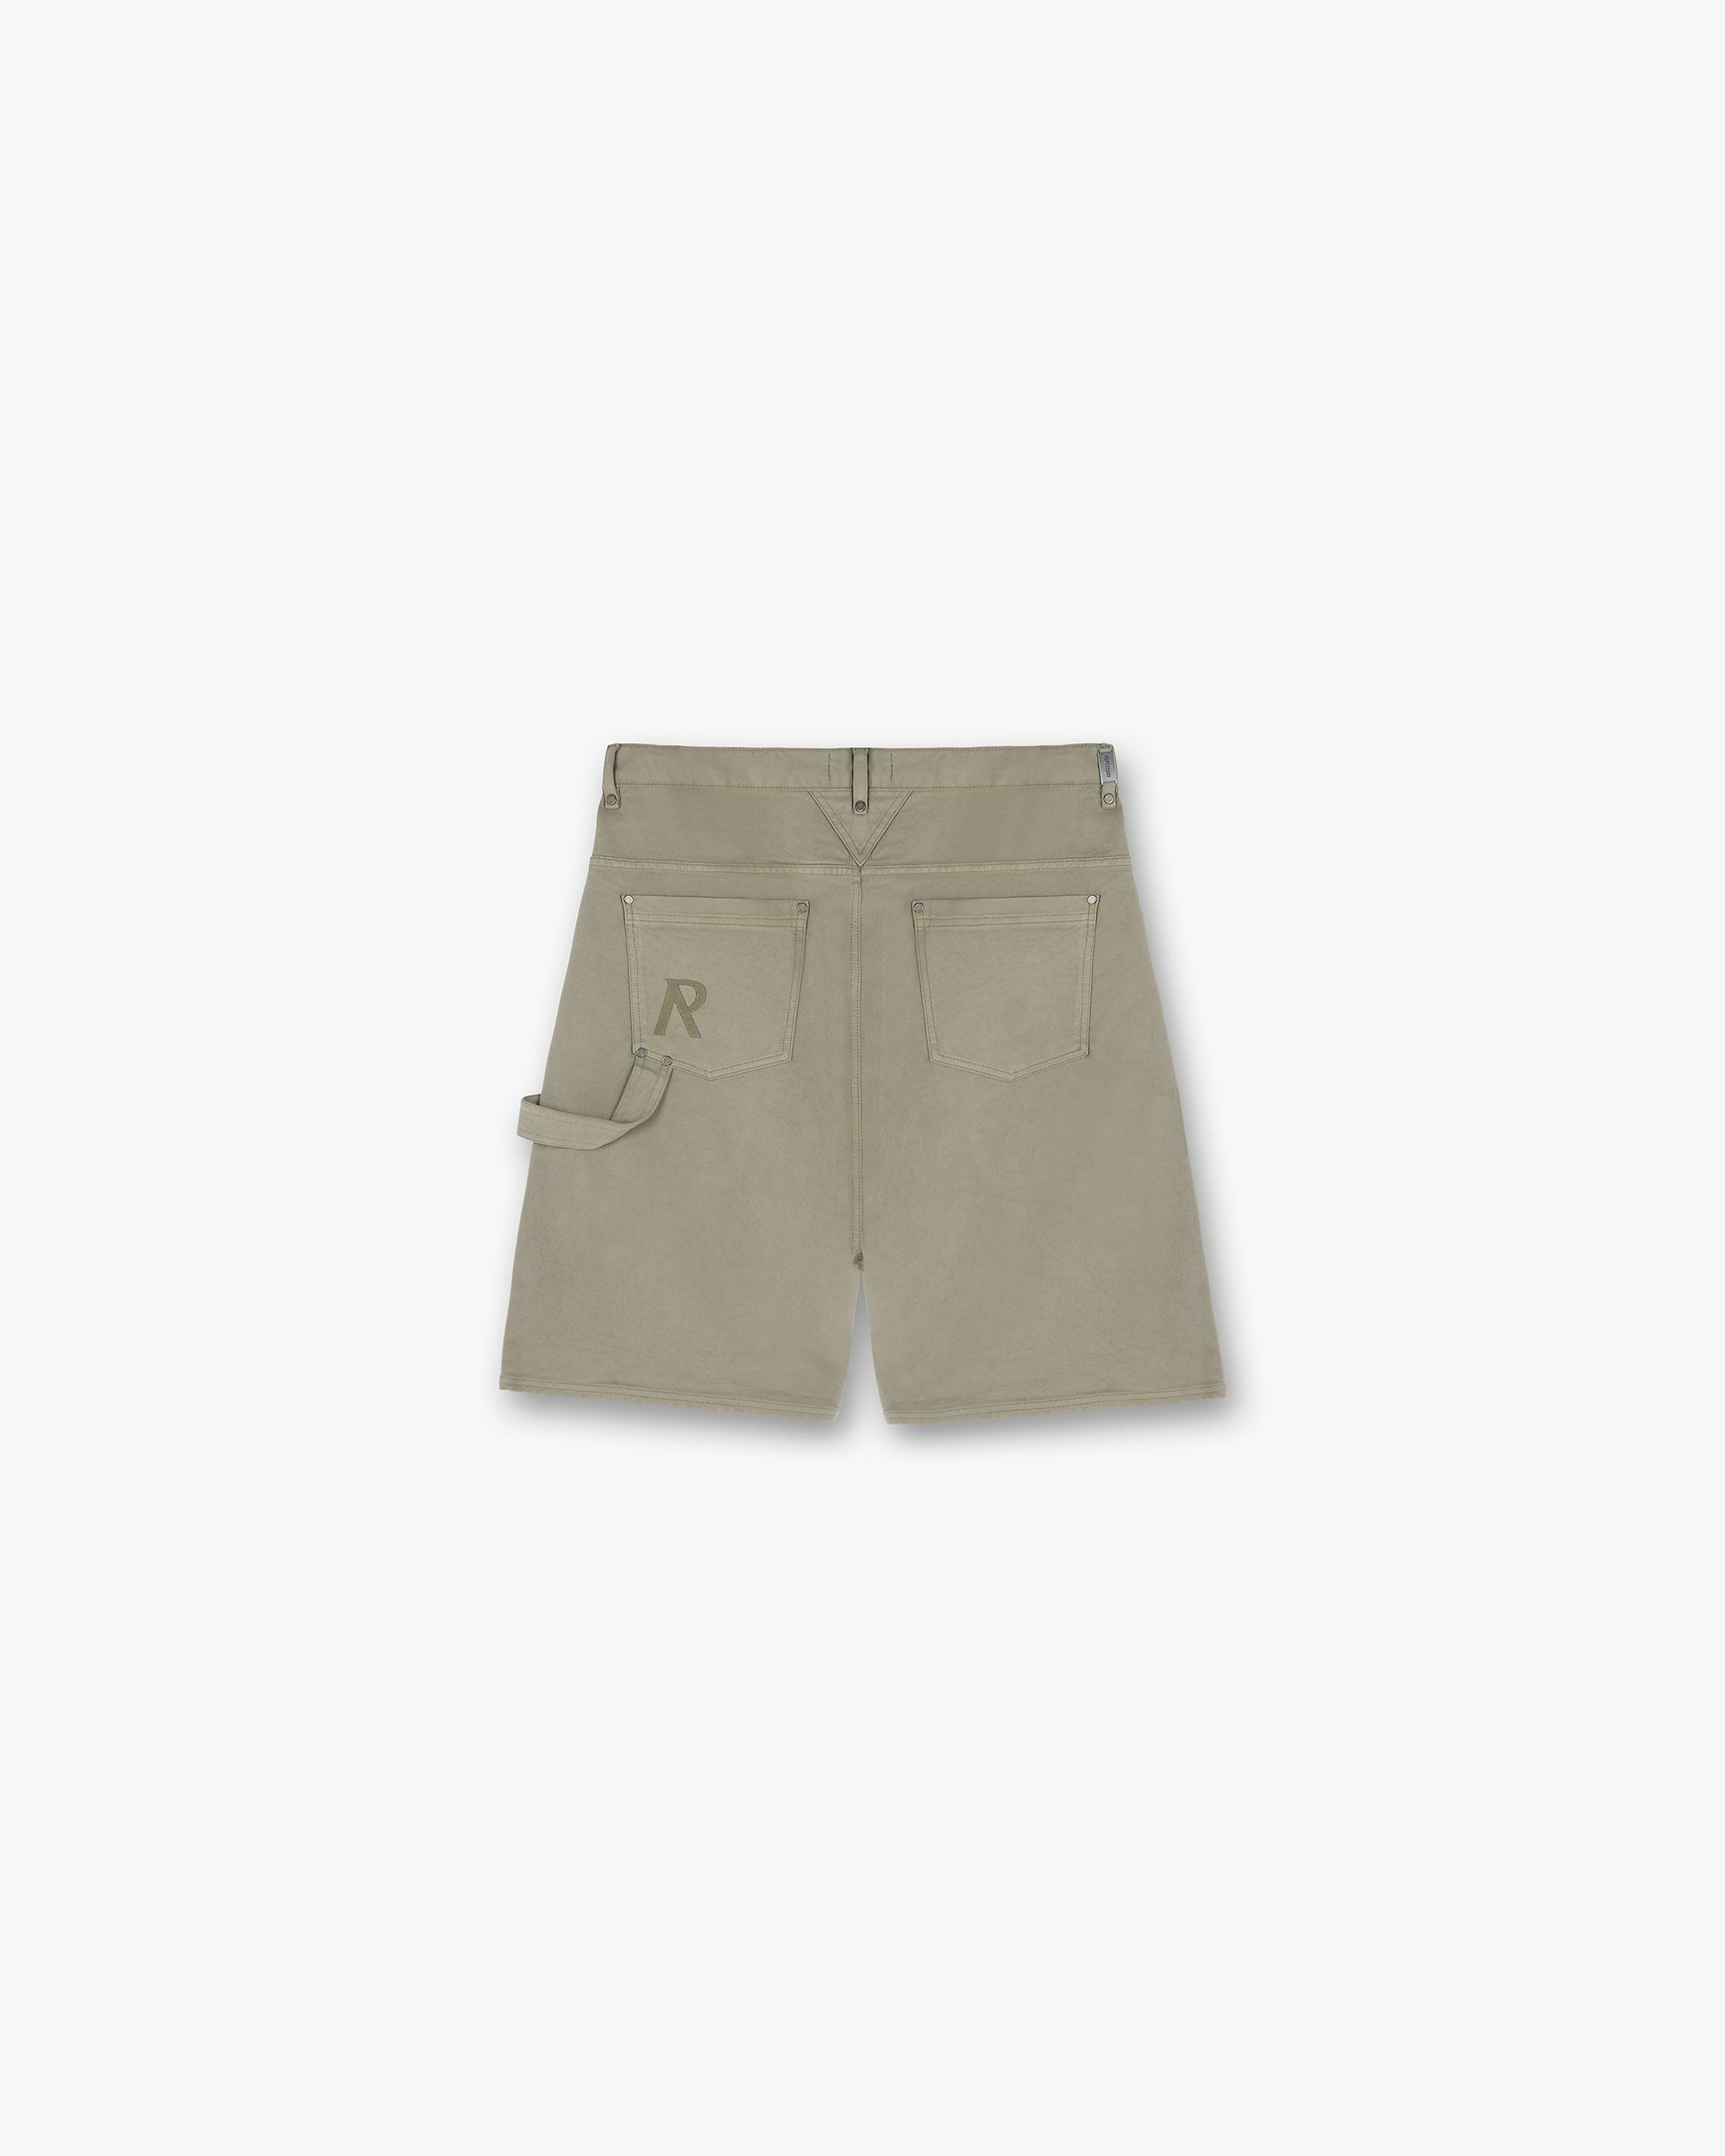 Utility Shorts | Khaki Shorts SC23 | Represent Clo